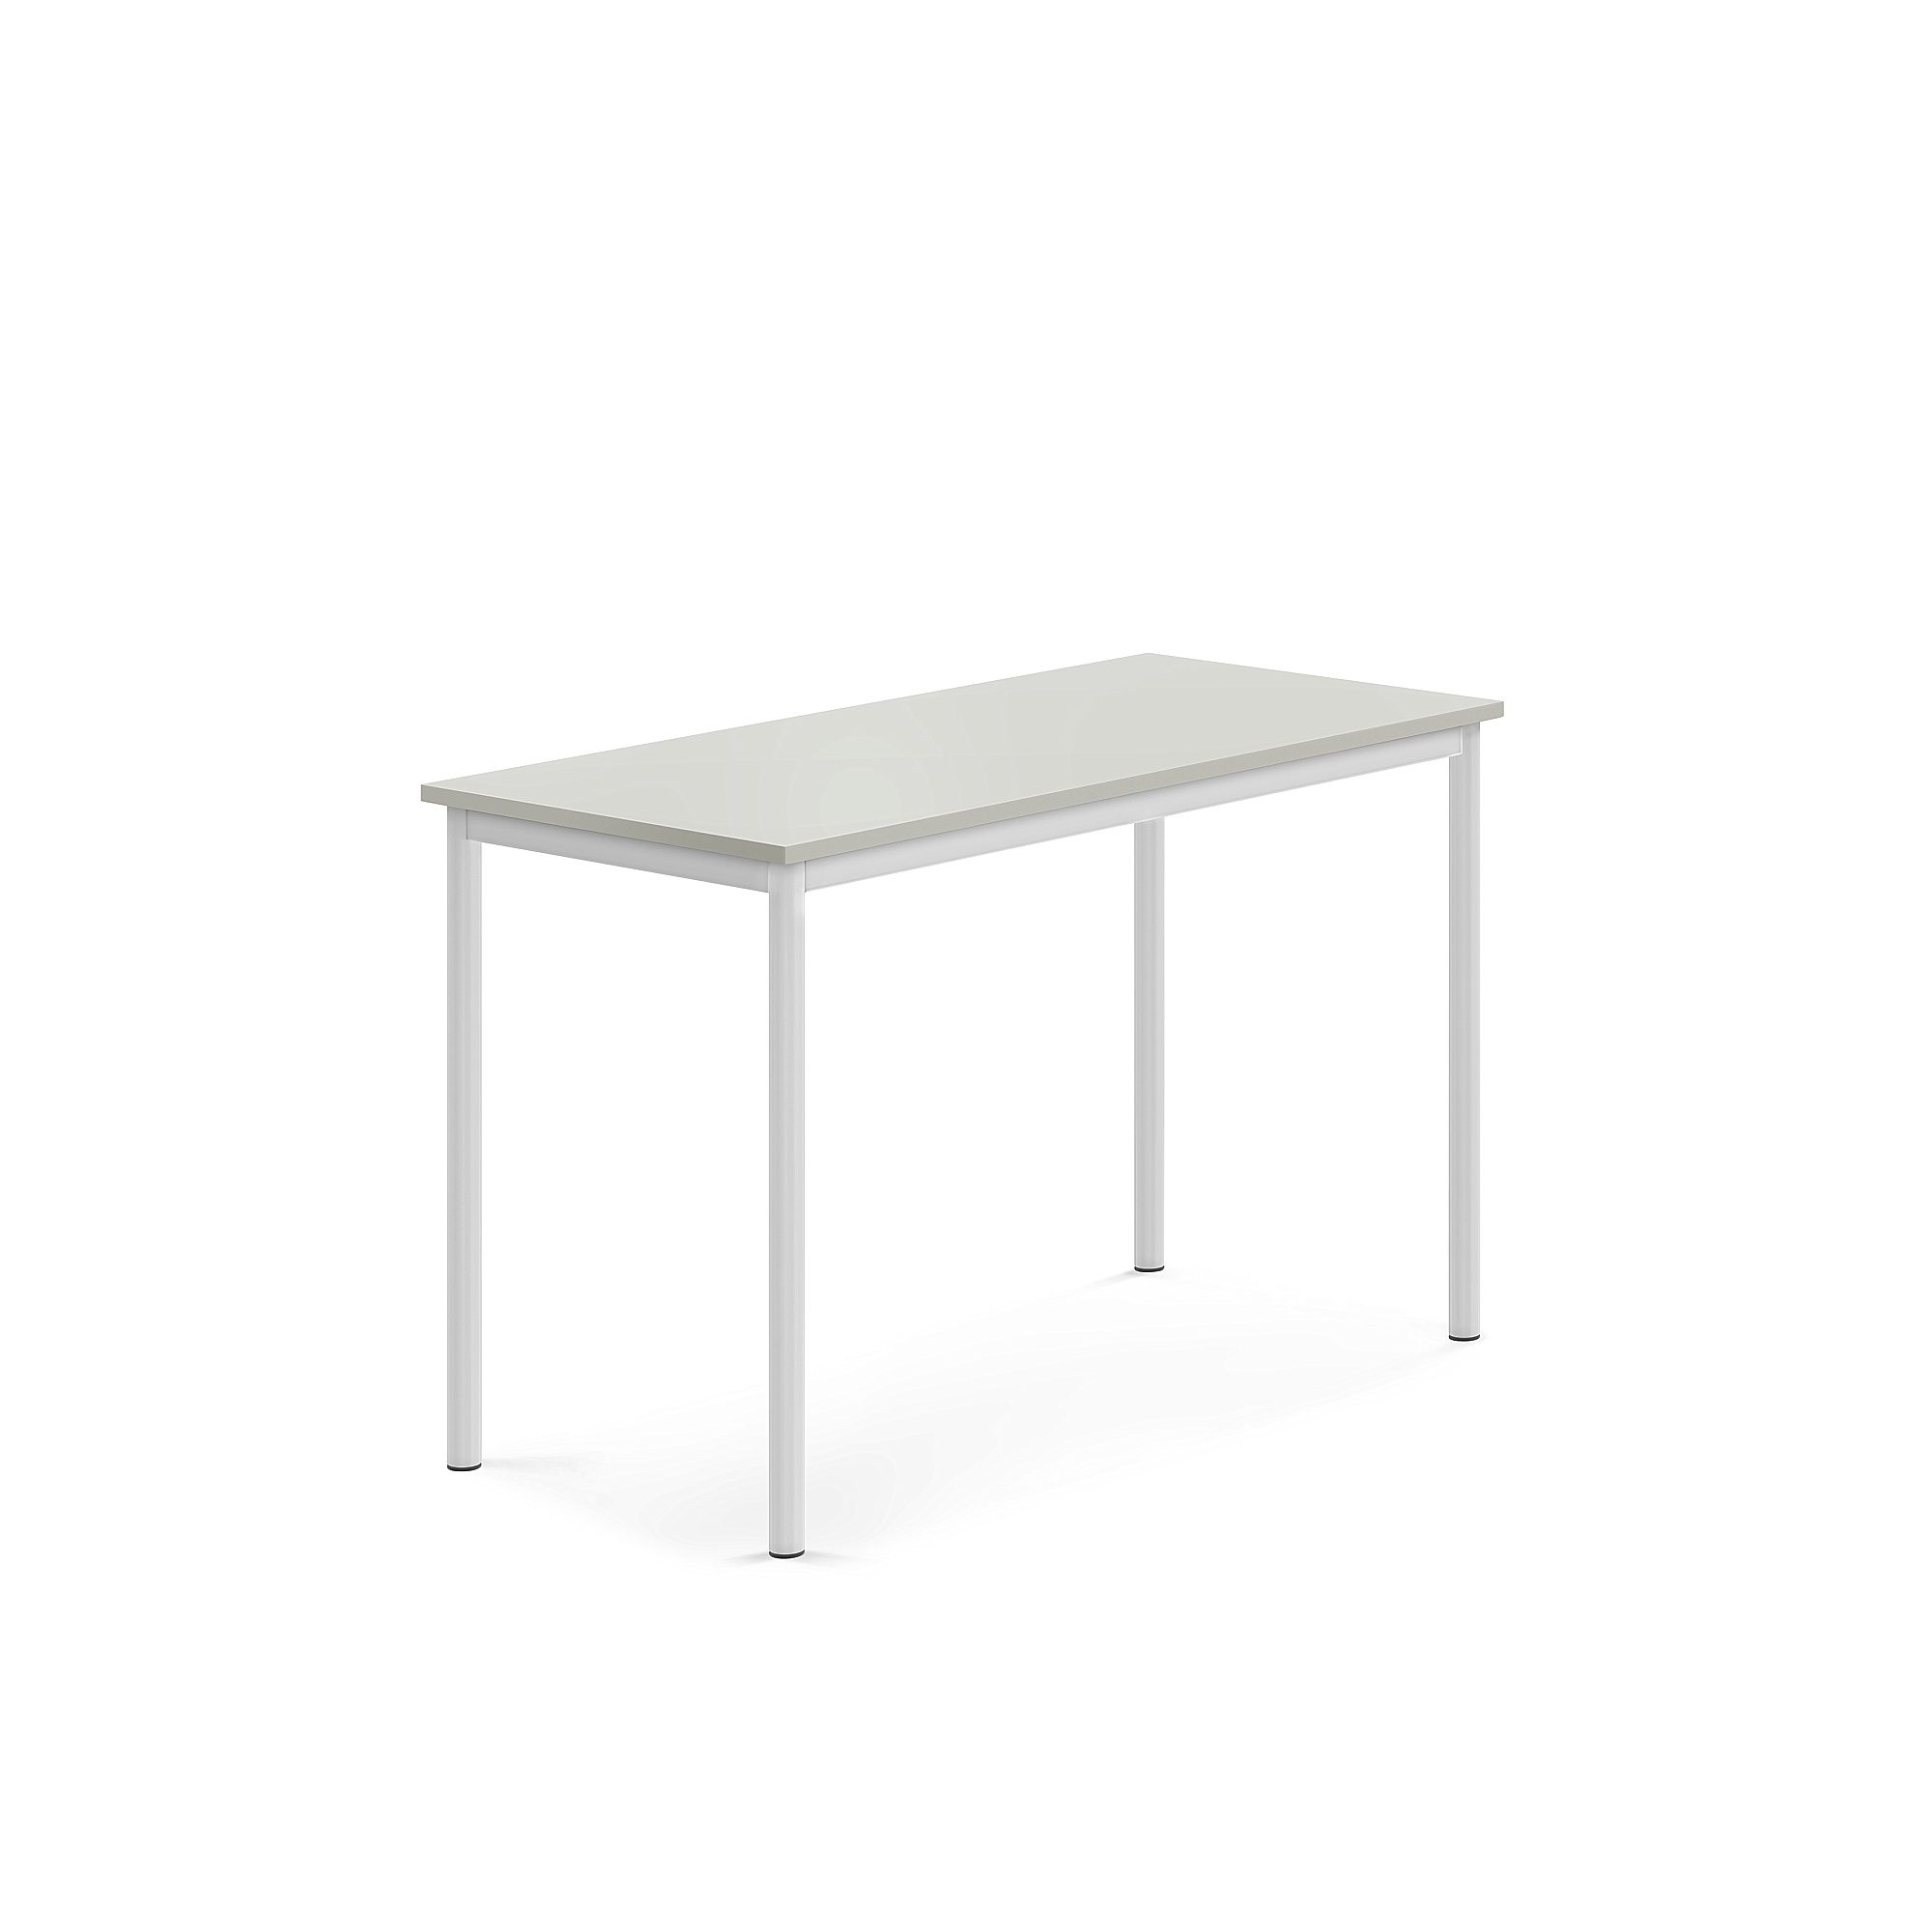 Stůl SONITUS, 1200x600x760 mm, bílé nohy, HPL deska tlumící hluk, šedá